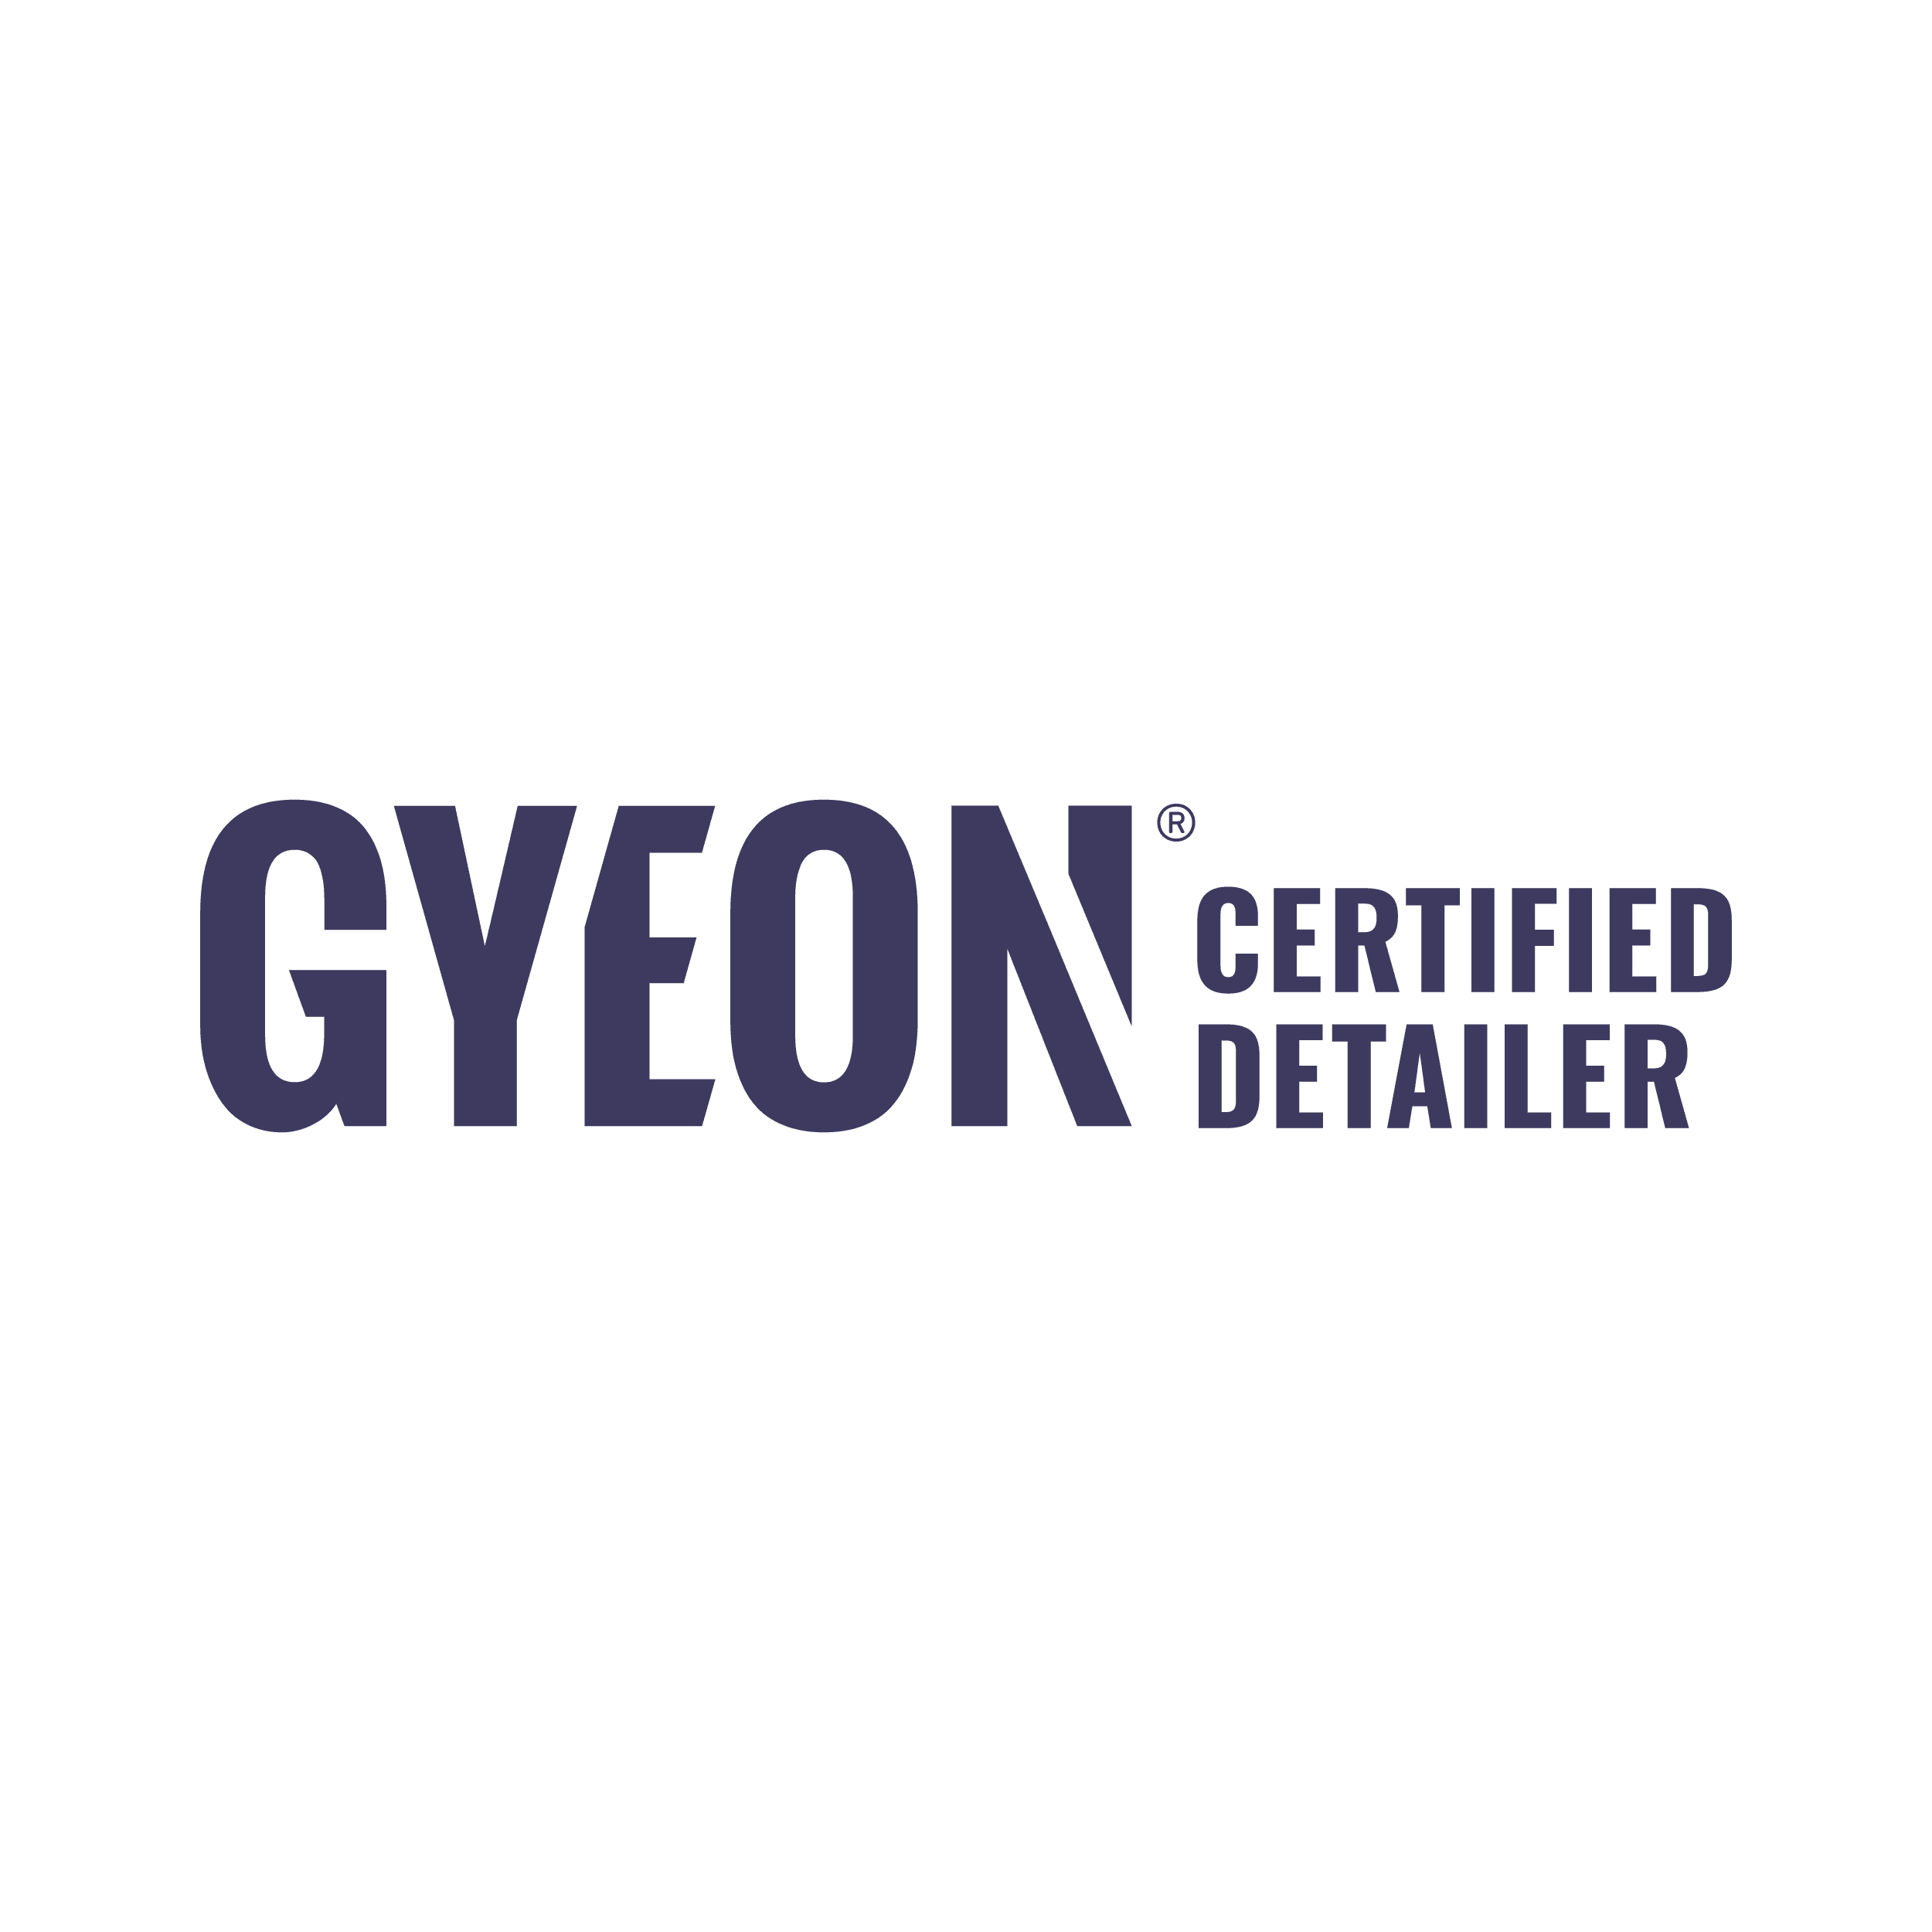 GYEON Certified Detailer